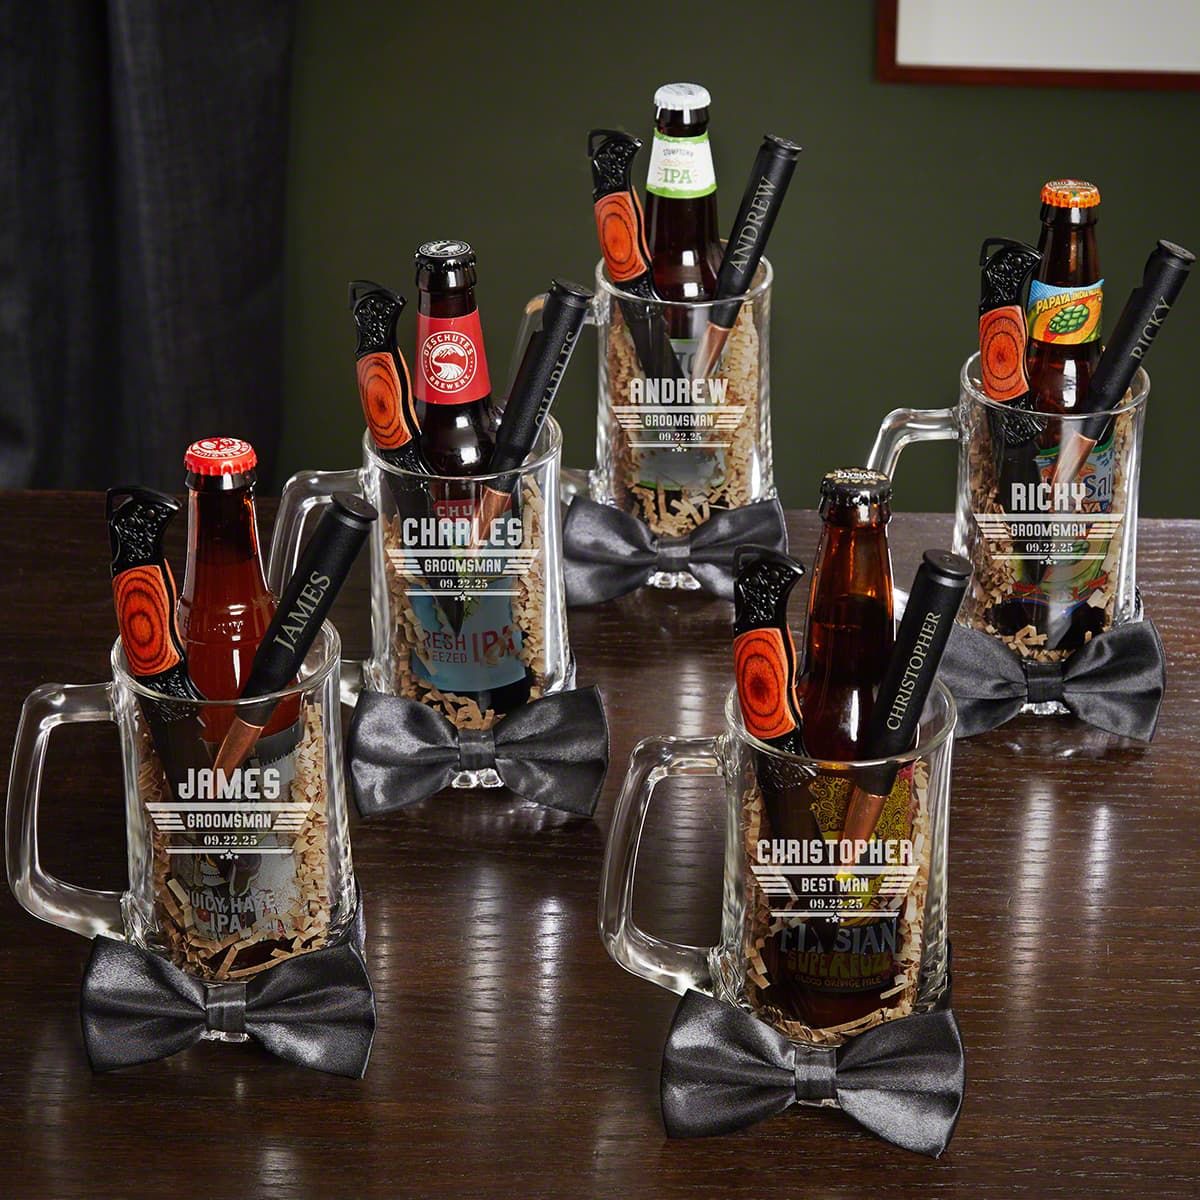 https://images.homewetbar.com/media/catalog/product/m/a/maverick-personlized-beer-mugs-and-bottle-openers-5-groomsmen-gift-sets-p1_10430.jpg?store=default&image-type=image